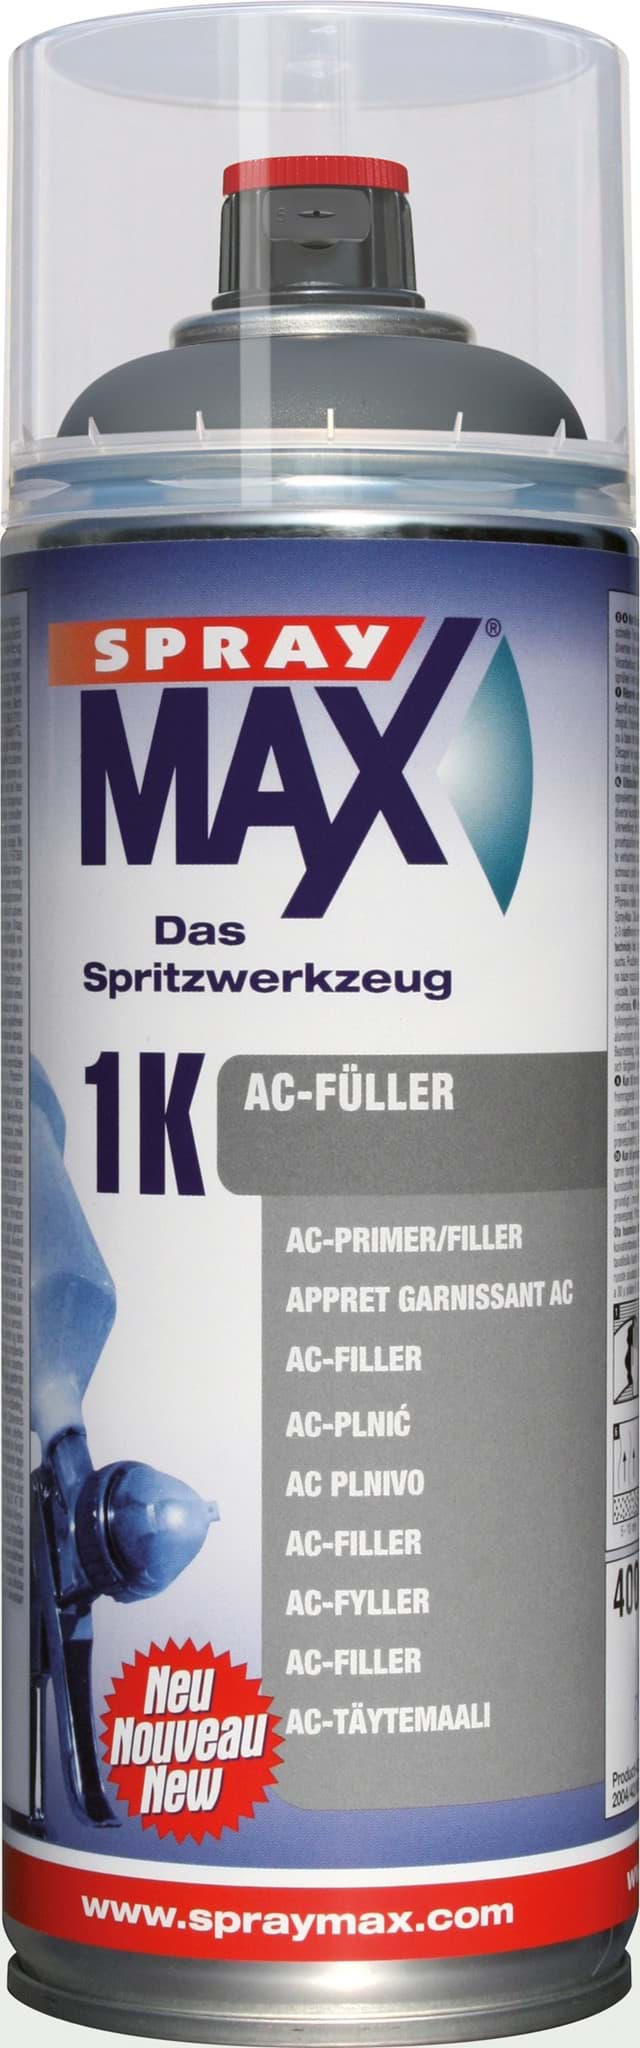 Изображение SprayMax 1K AC-Füller dunkelgrau Spray 400ml